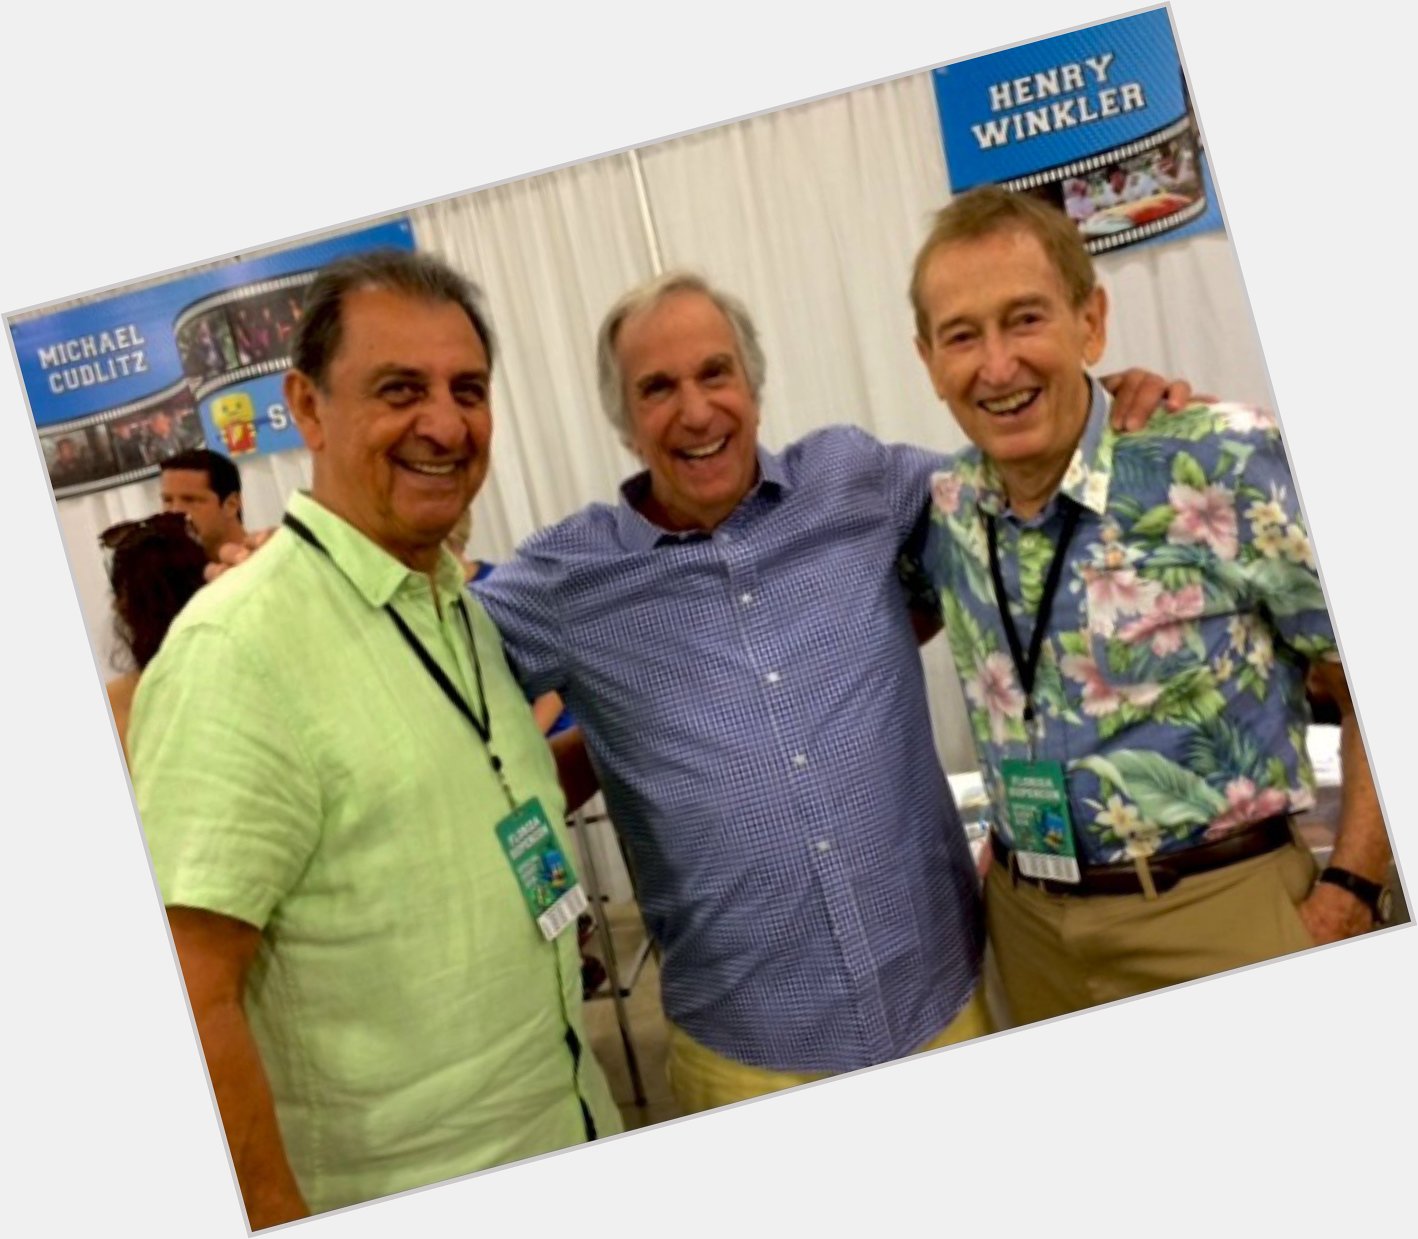 Luis & Bob wish you a Happy Birthday Henry Winkler! 